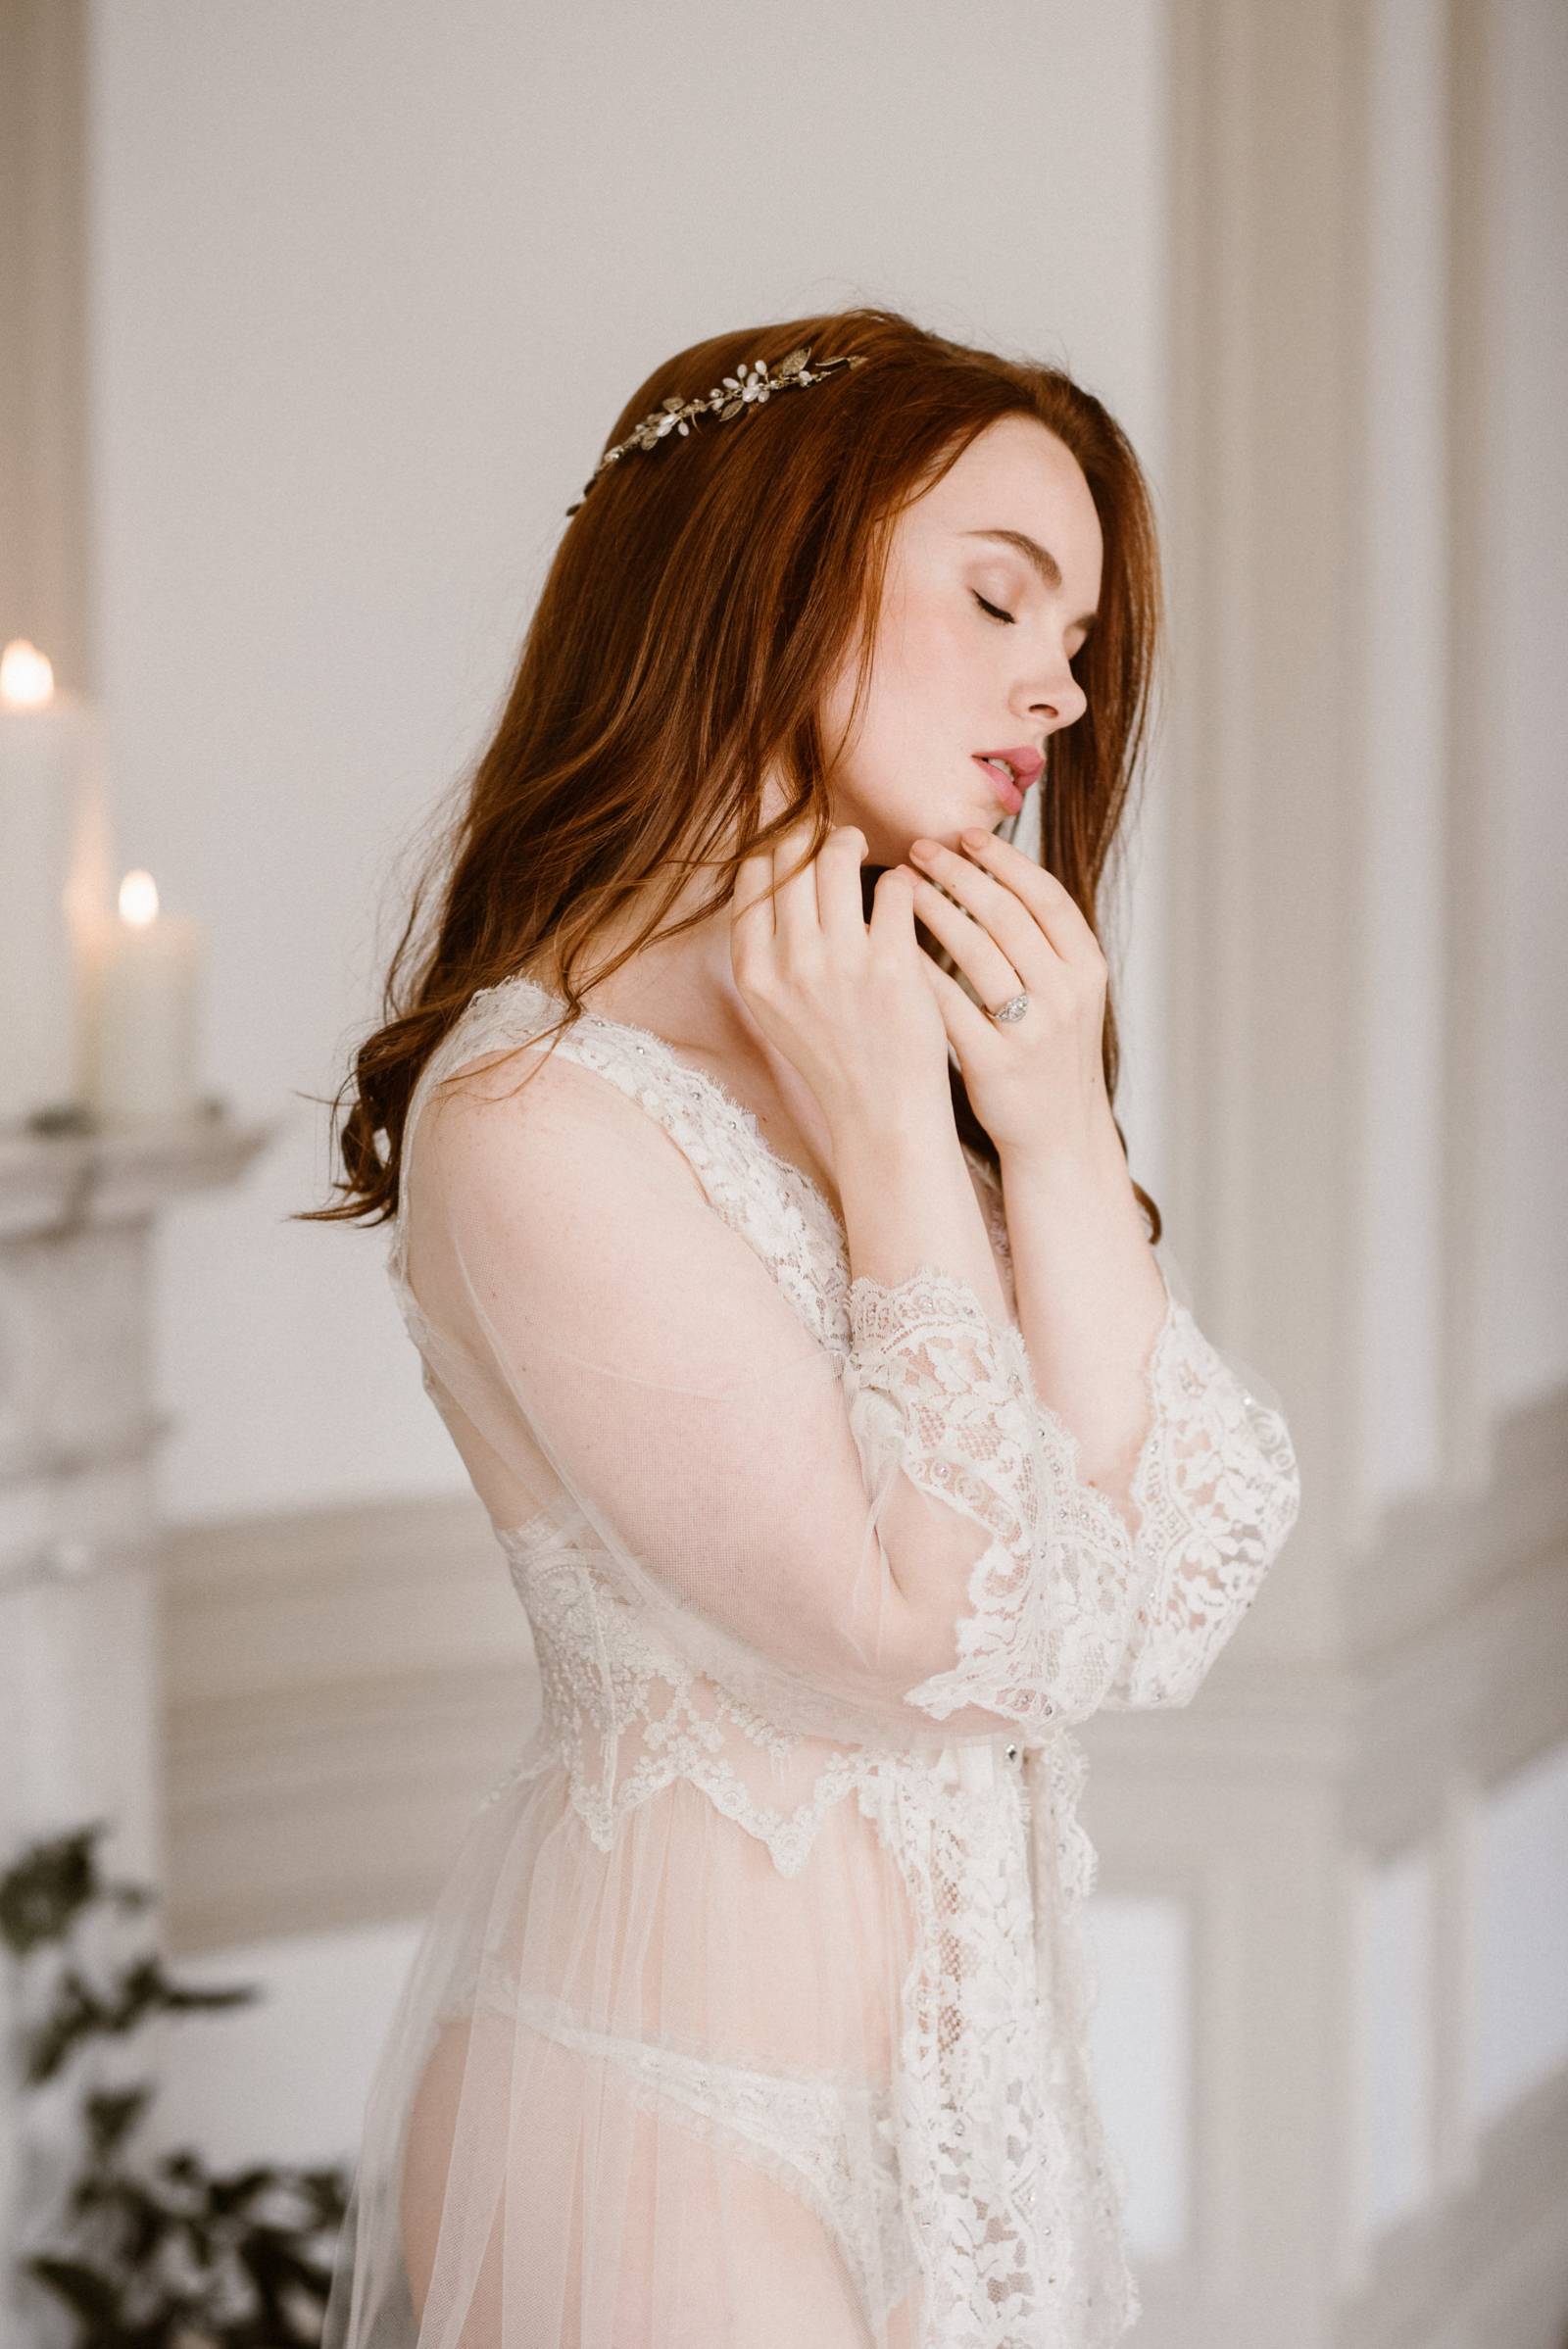 https://www.magnoliarouge.com/inspiration/moody-thoughtful-bridal-boudoir-shoot/